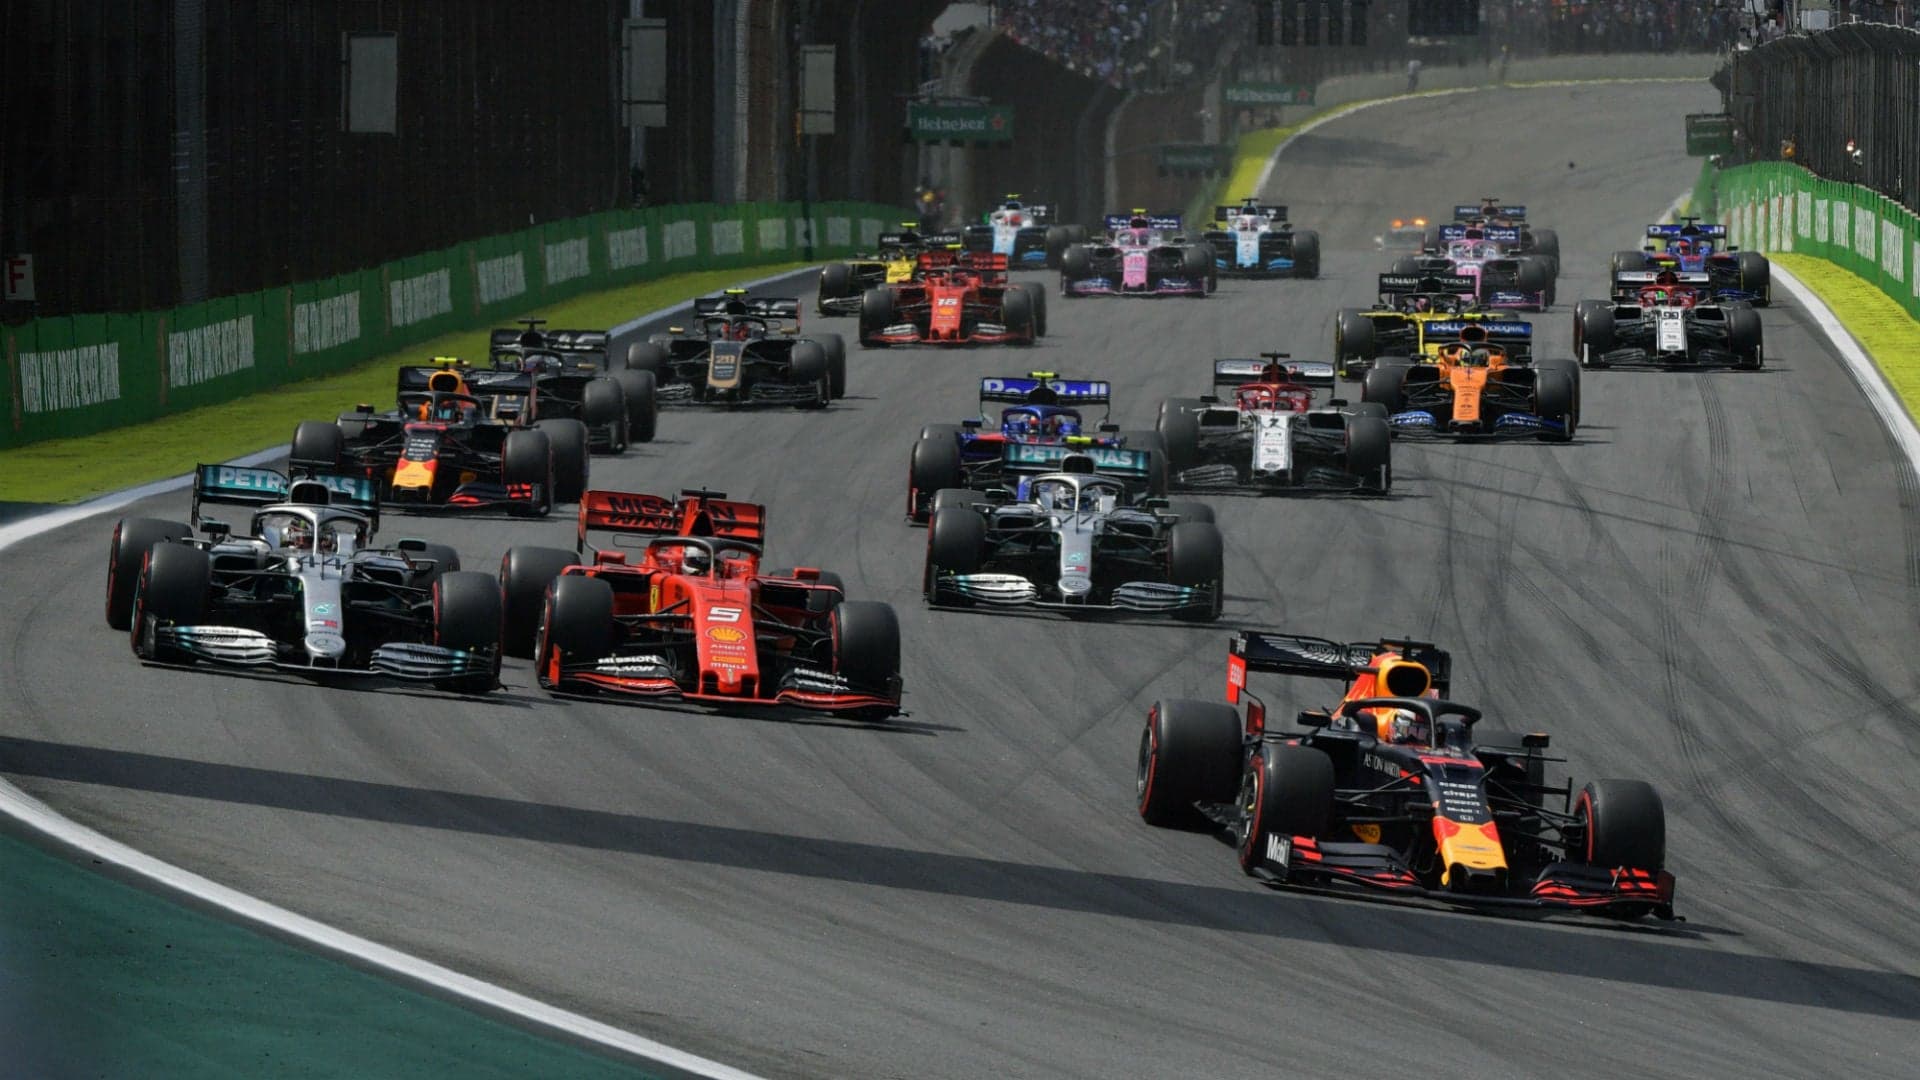 Netflix Docuseries Formula 1 ‘Drive to Survive’ Returns Feb. 28